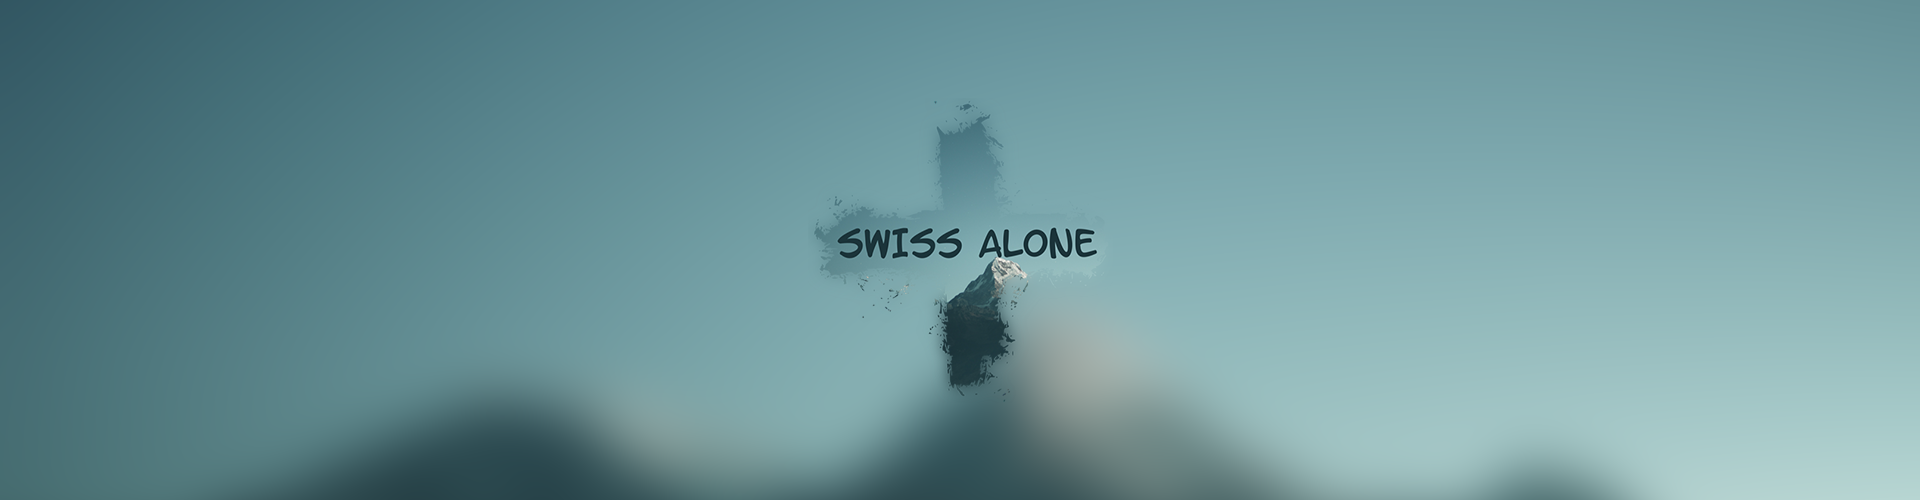 Swiss Alone